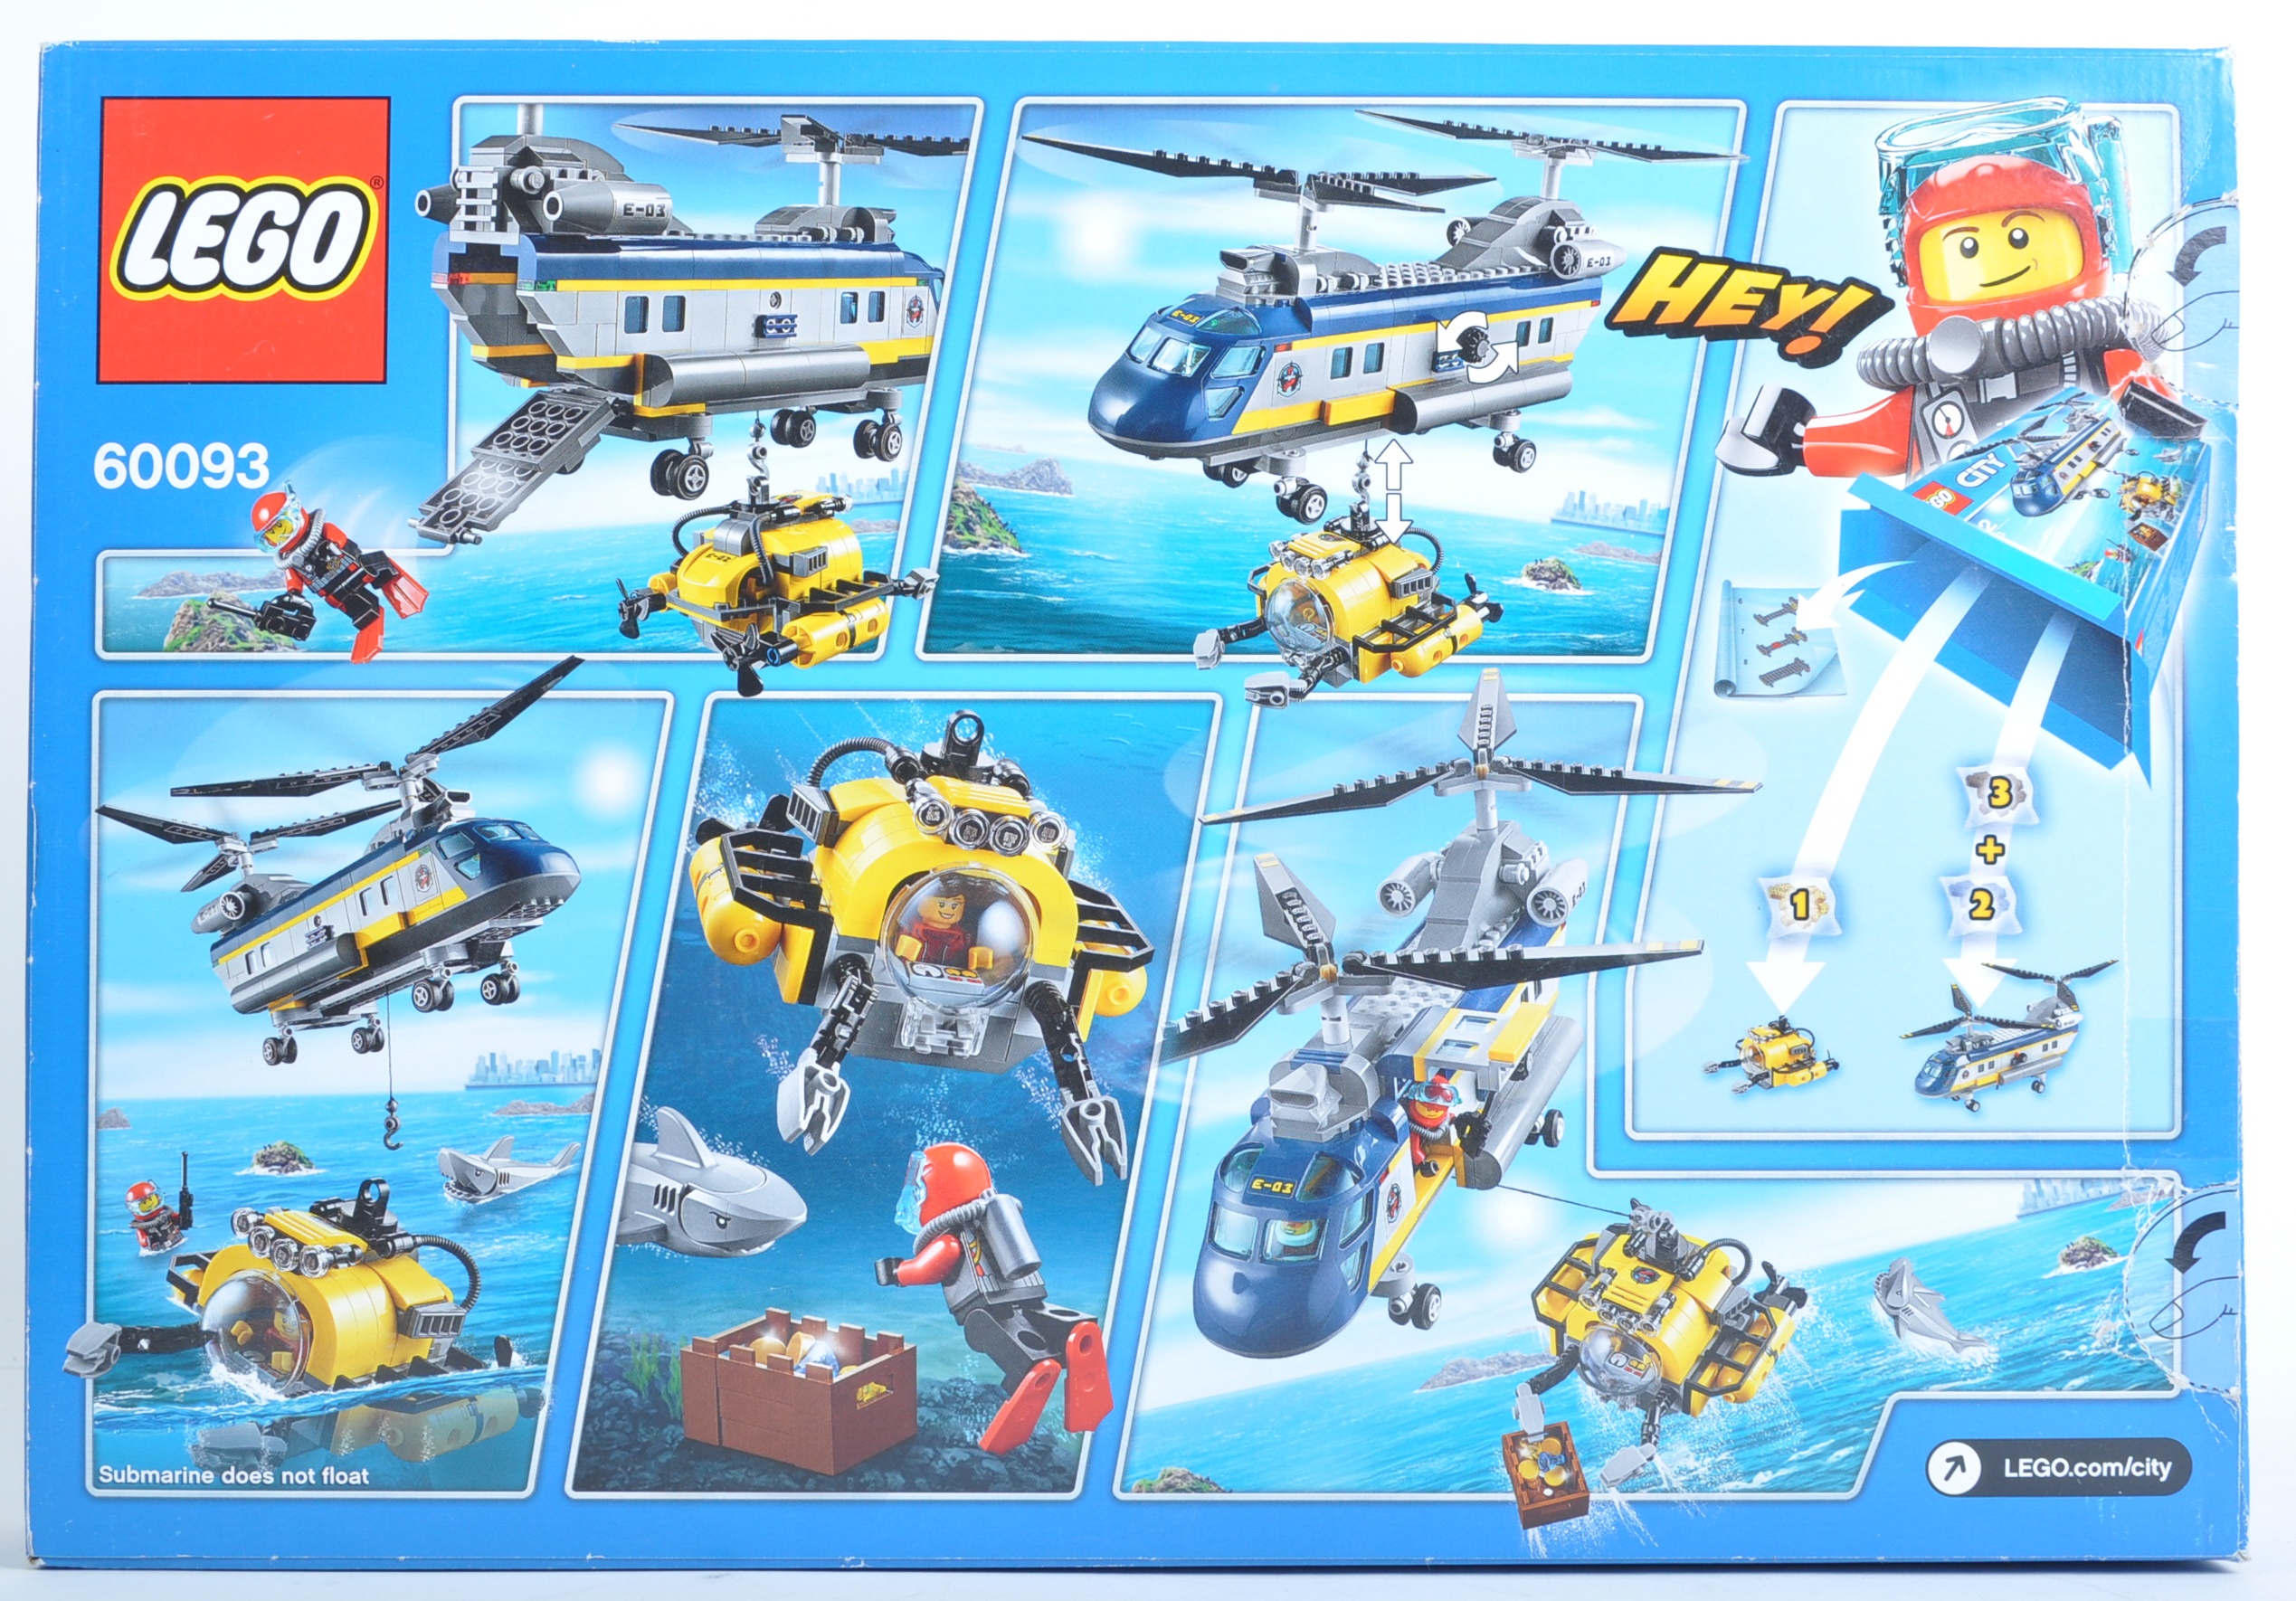 LEGO SET - LEGO CITY - 60093 - DEEP SEA HELICOPTER - Image 2 of 3